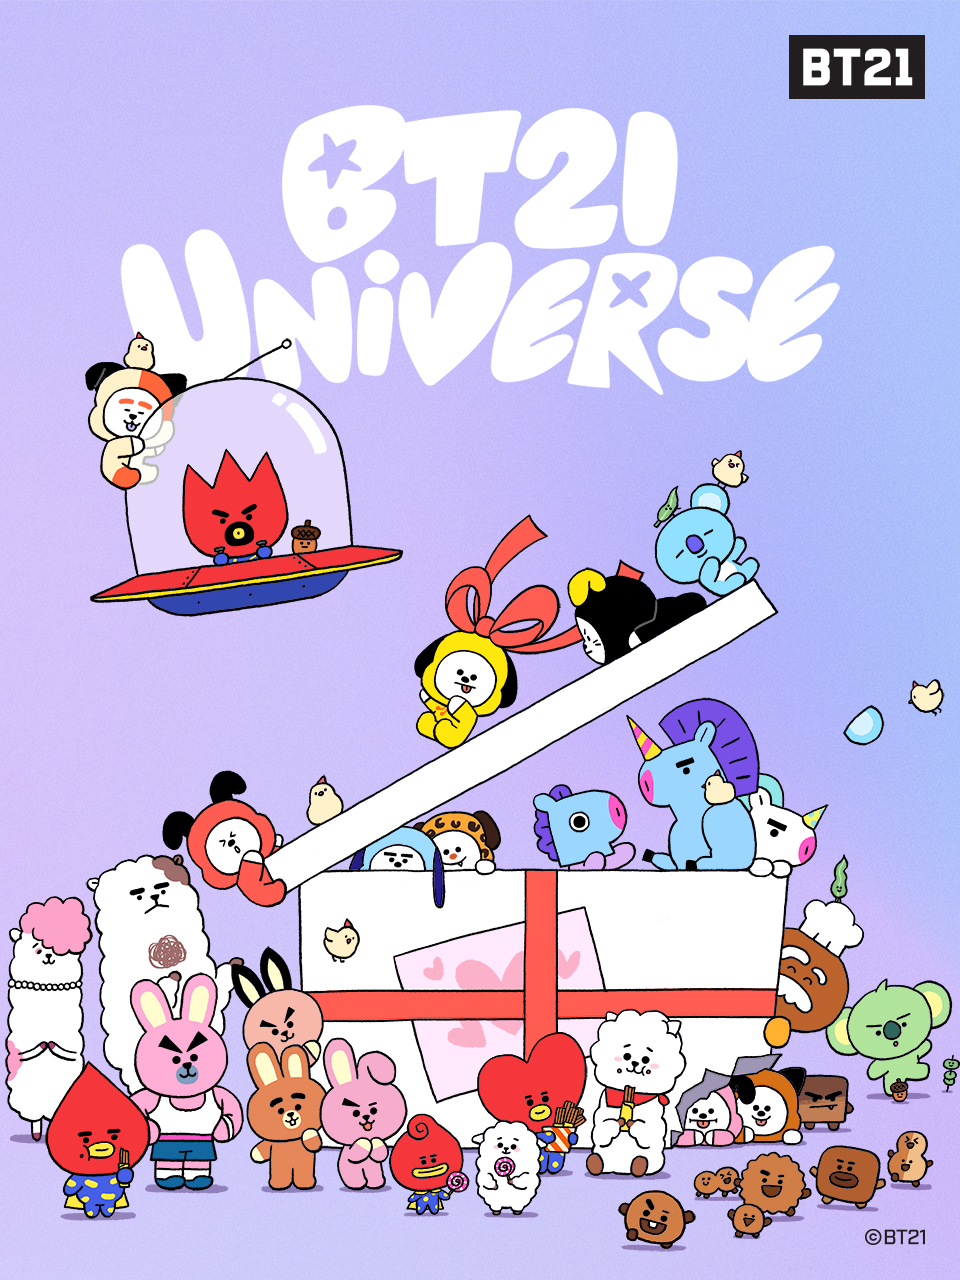 BT21 UNIVERSE动画